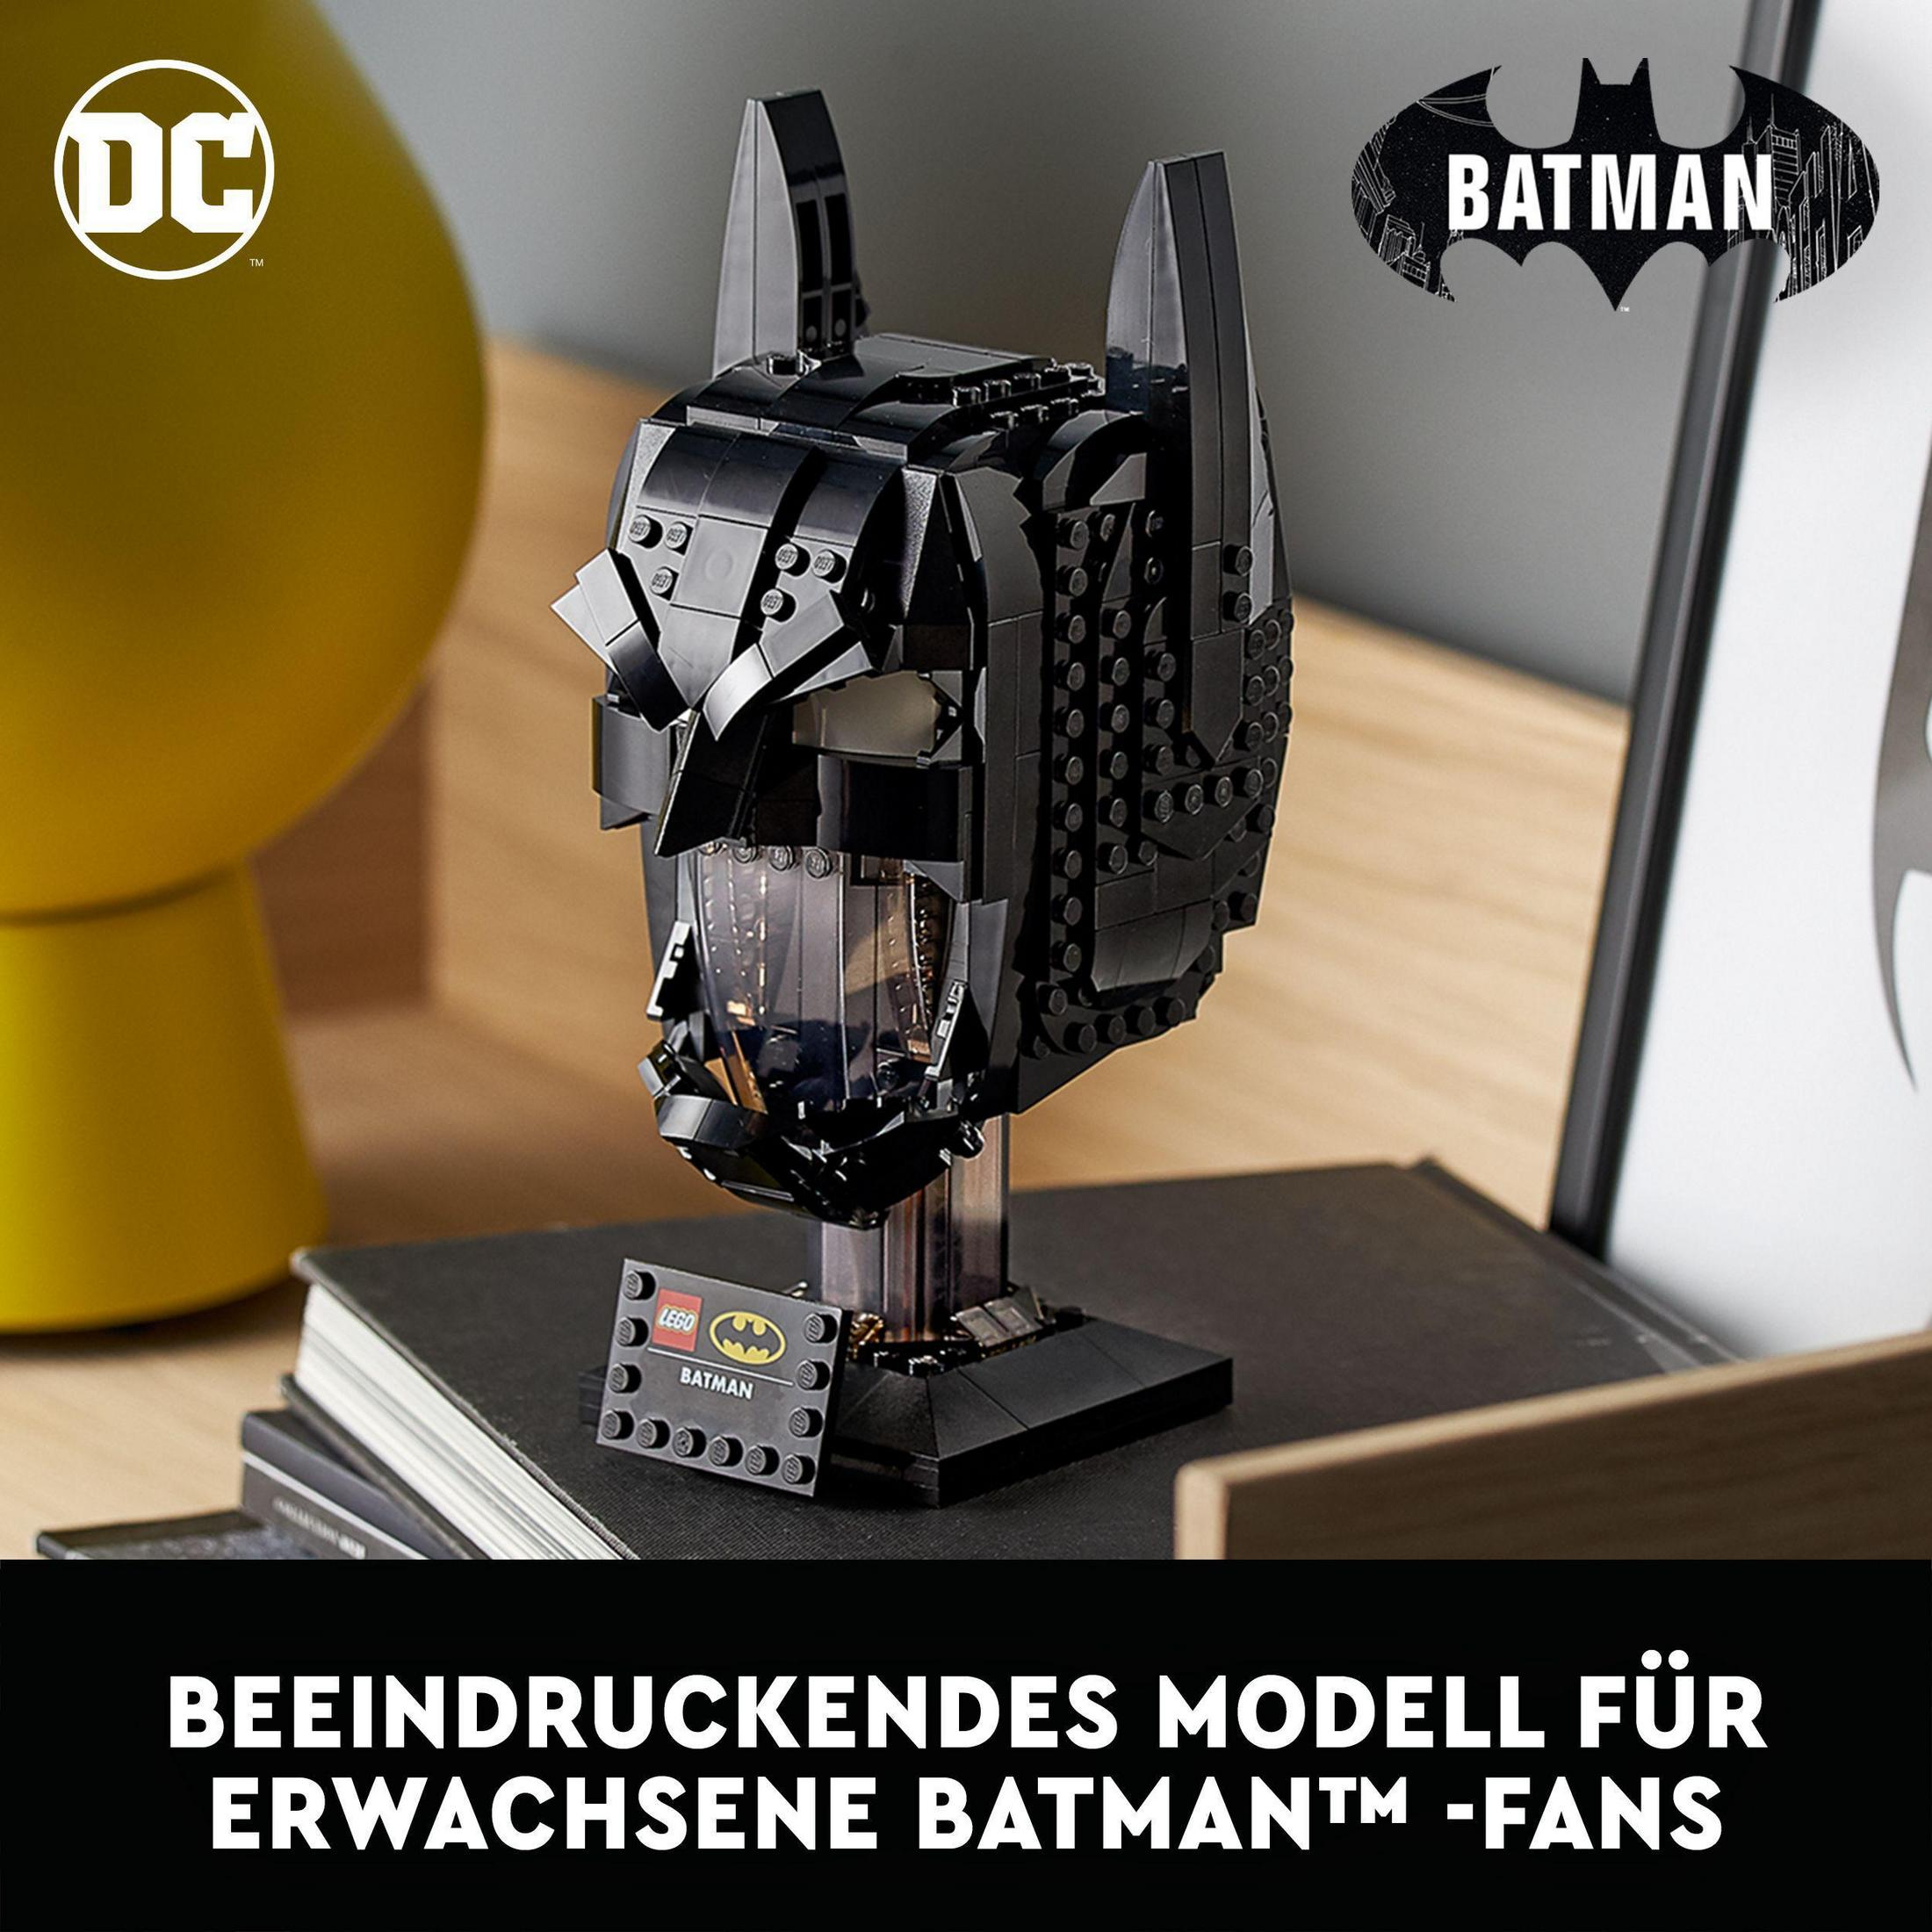 LEGO 76182 BATMAN HELM Bausatz, Mehrfarbig